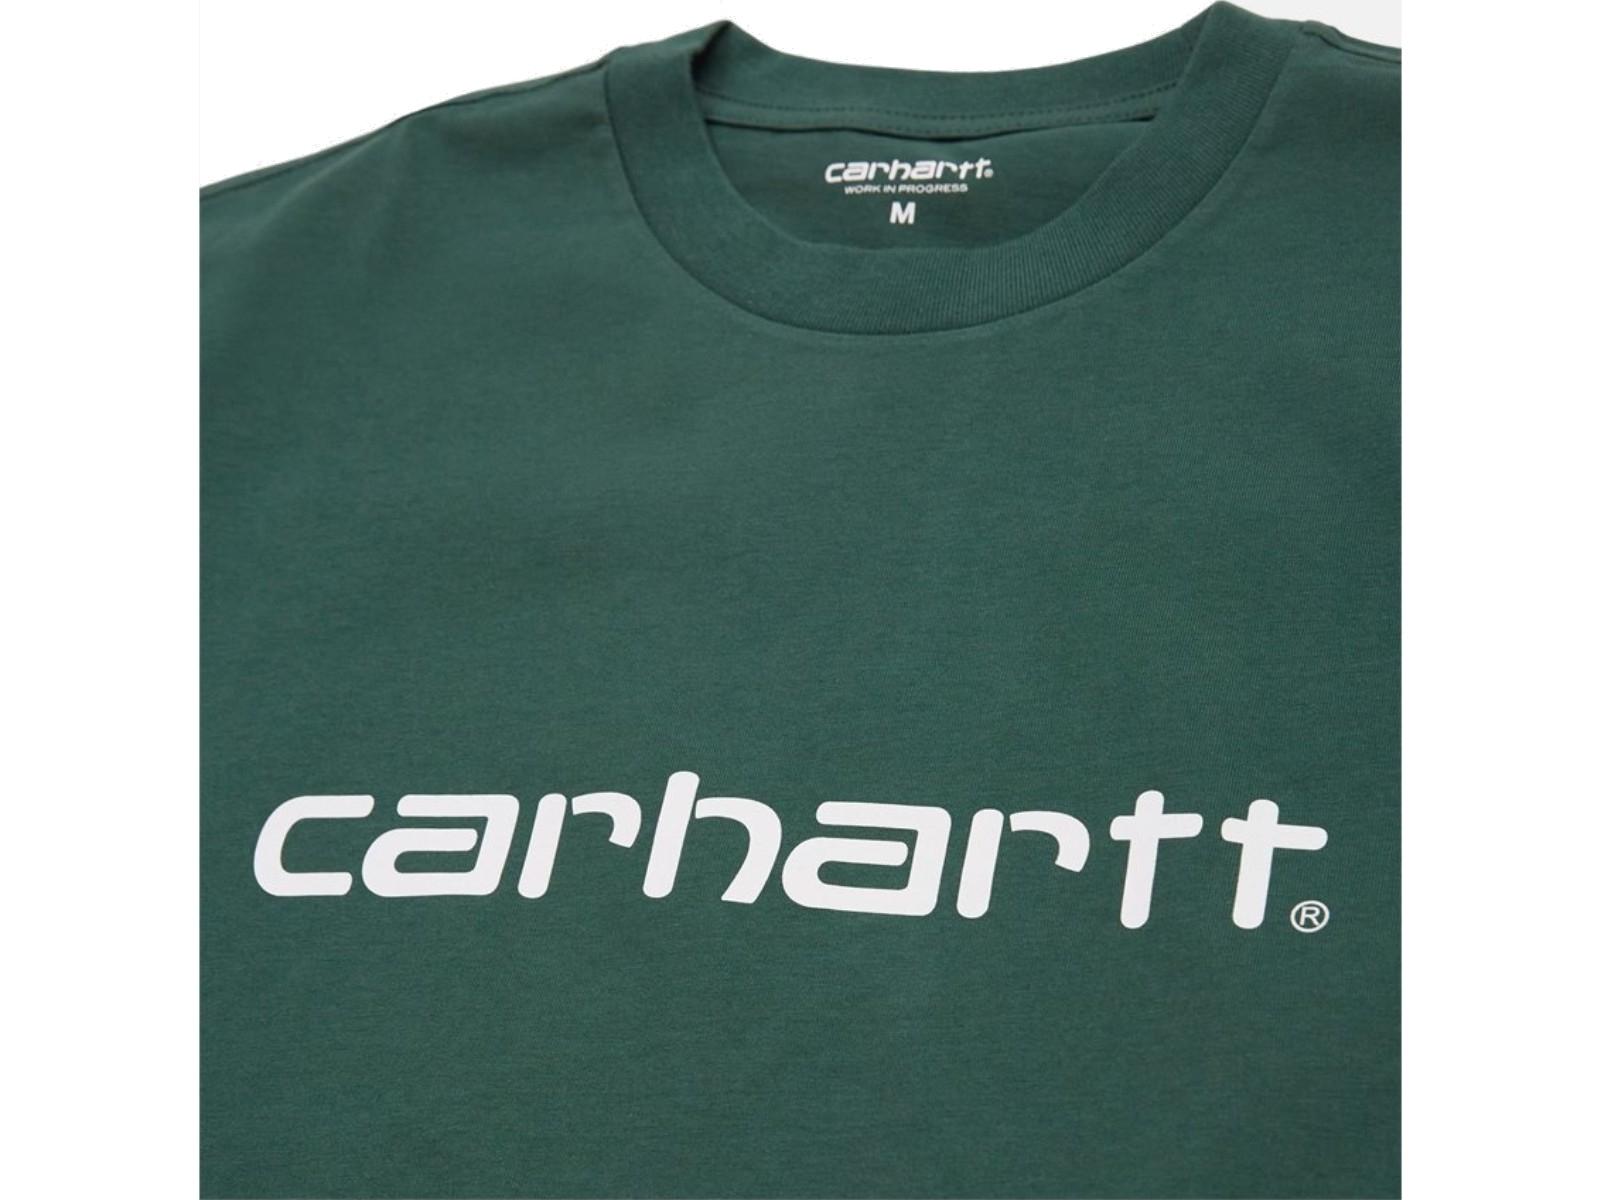 CARHARTT WIP Camiseta S/S Script T-Shirt Treehouse